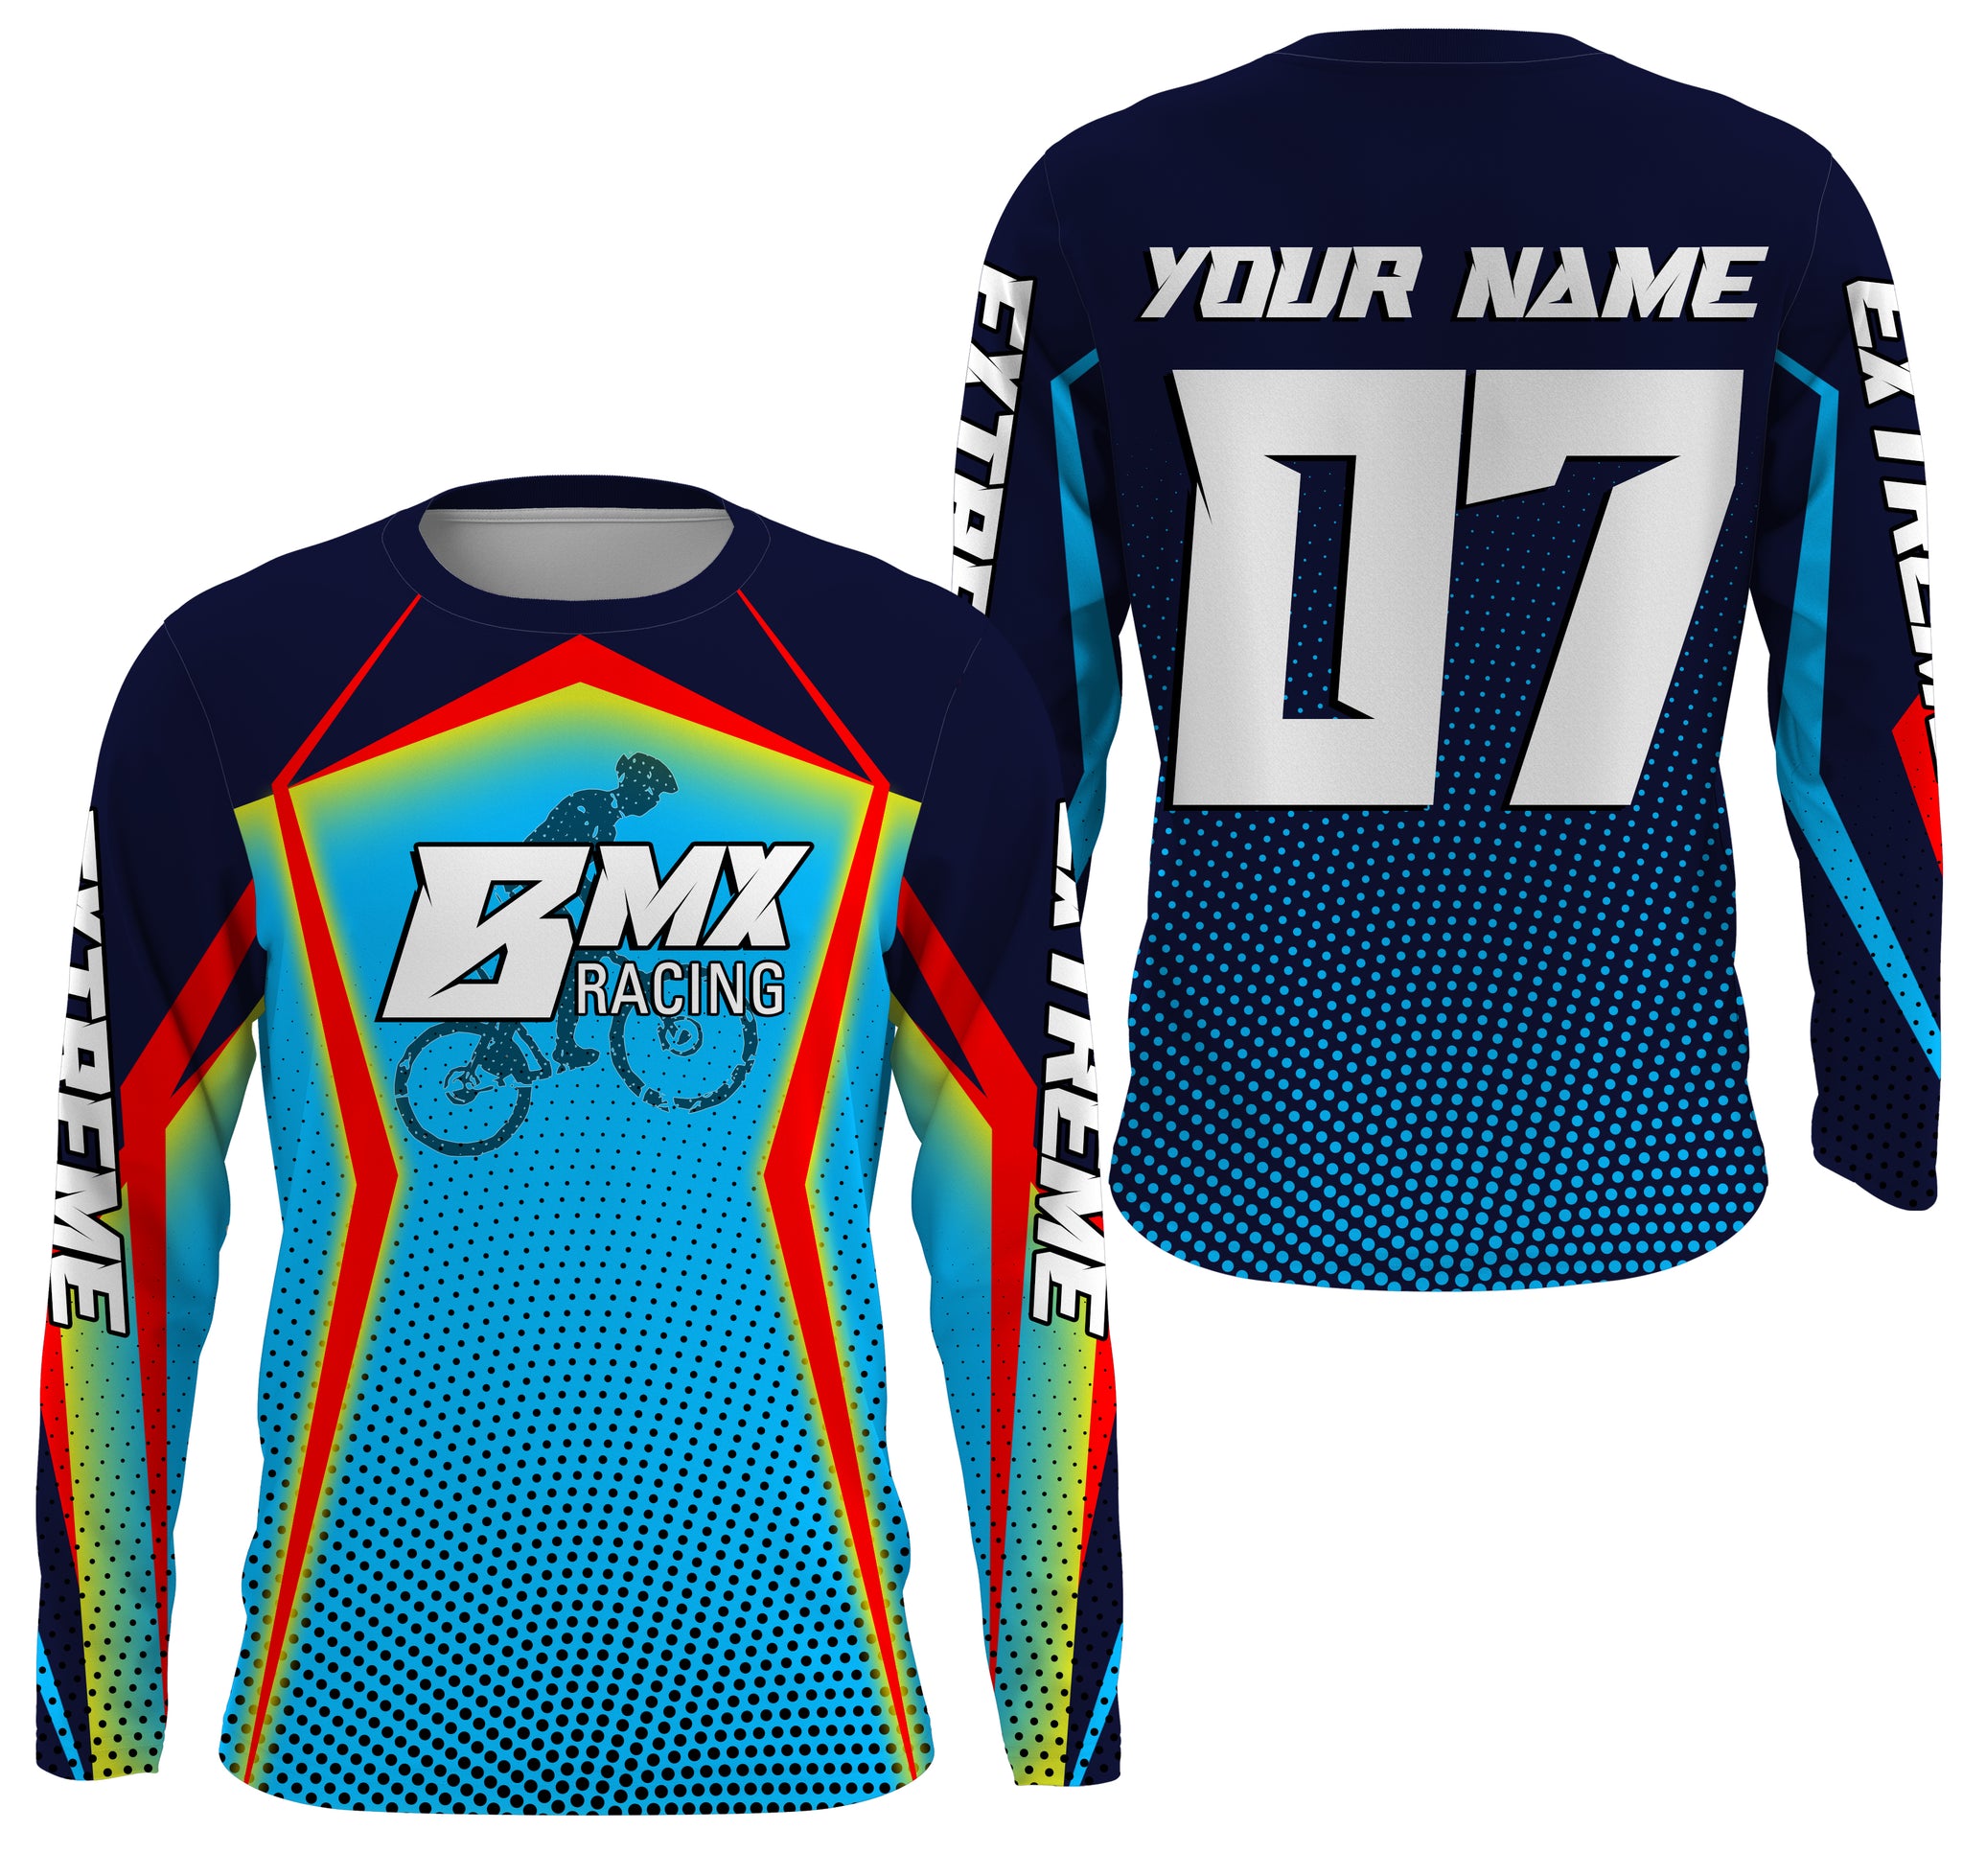 Customized BMX racing jersey UPF30+ biking rider shirts extreme Off-road Cycling Adult&Kid racewear| SLC58